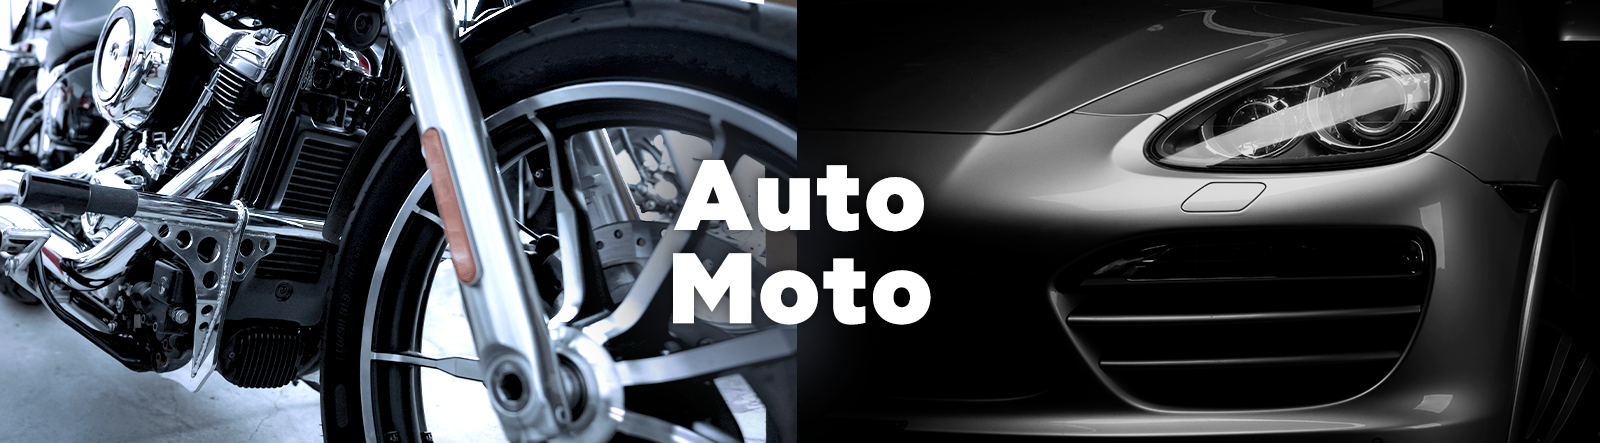 Auto Moto TOP BANNER Ελληνική Αυτοκίνηση https://eliniki.gr/%ce%b1%cf%85%cf%84%ce%bf%ce%ba%ce%af%ce%bd%ce%b7%cf%83%ce%b7/